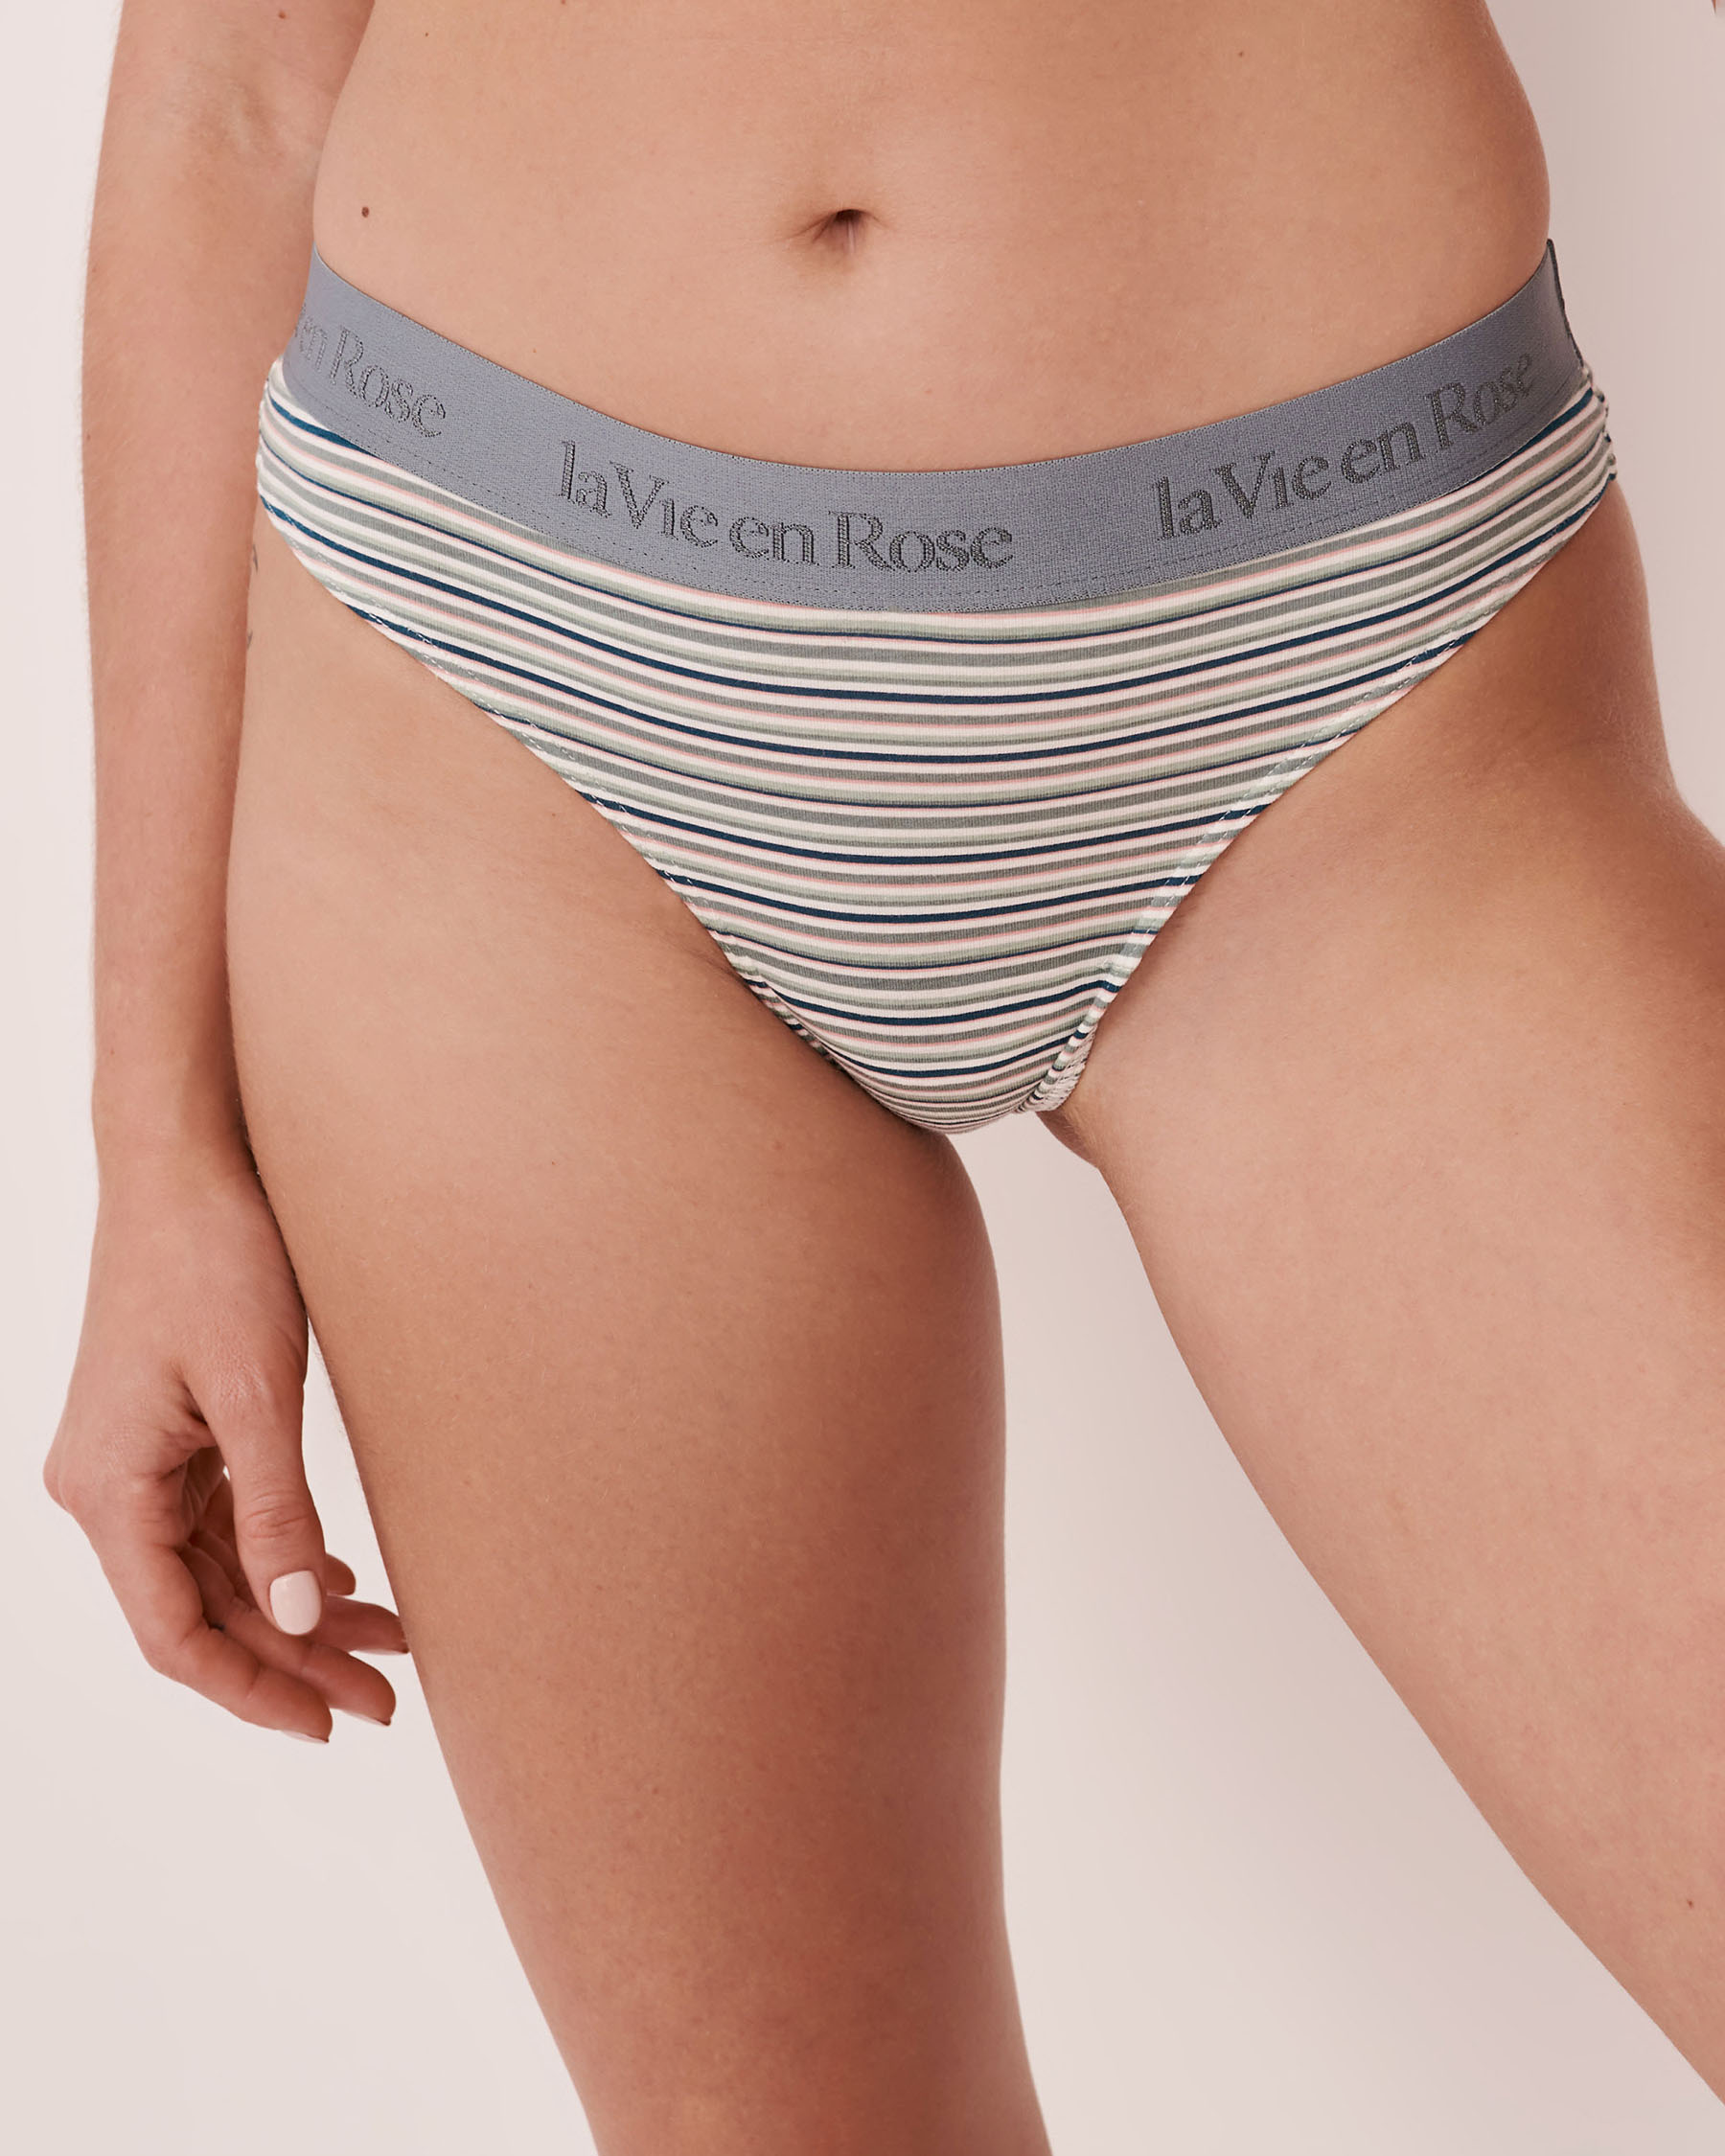 LA VIE EN ROSE Cotton and Logo Elastic Band Thong Panty Stripes 20100212 - View1